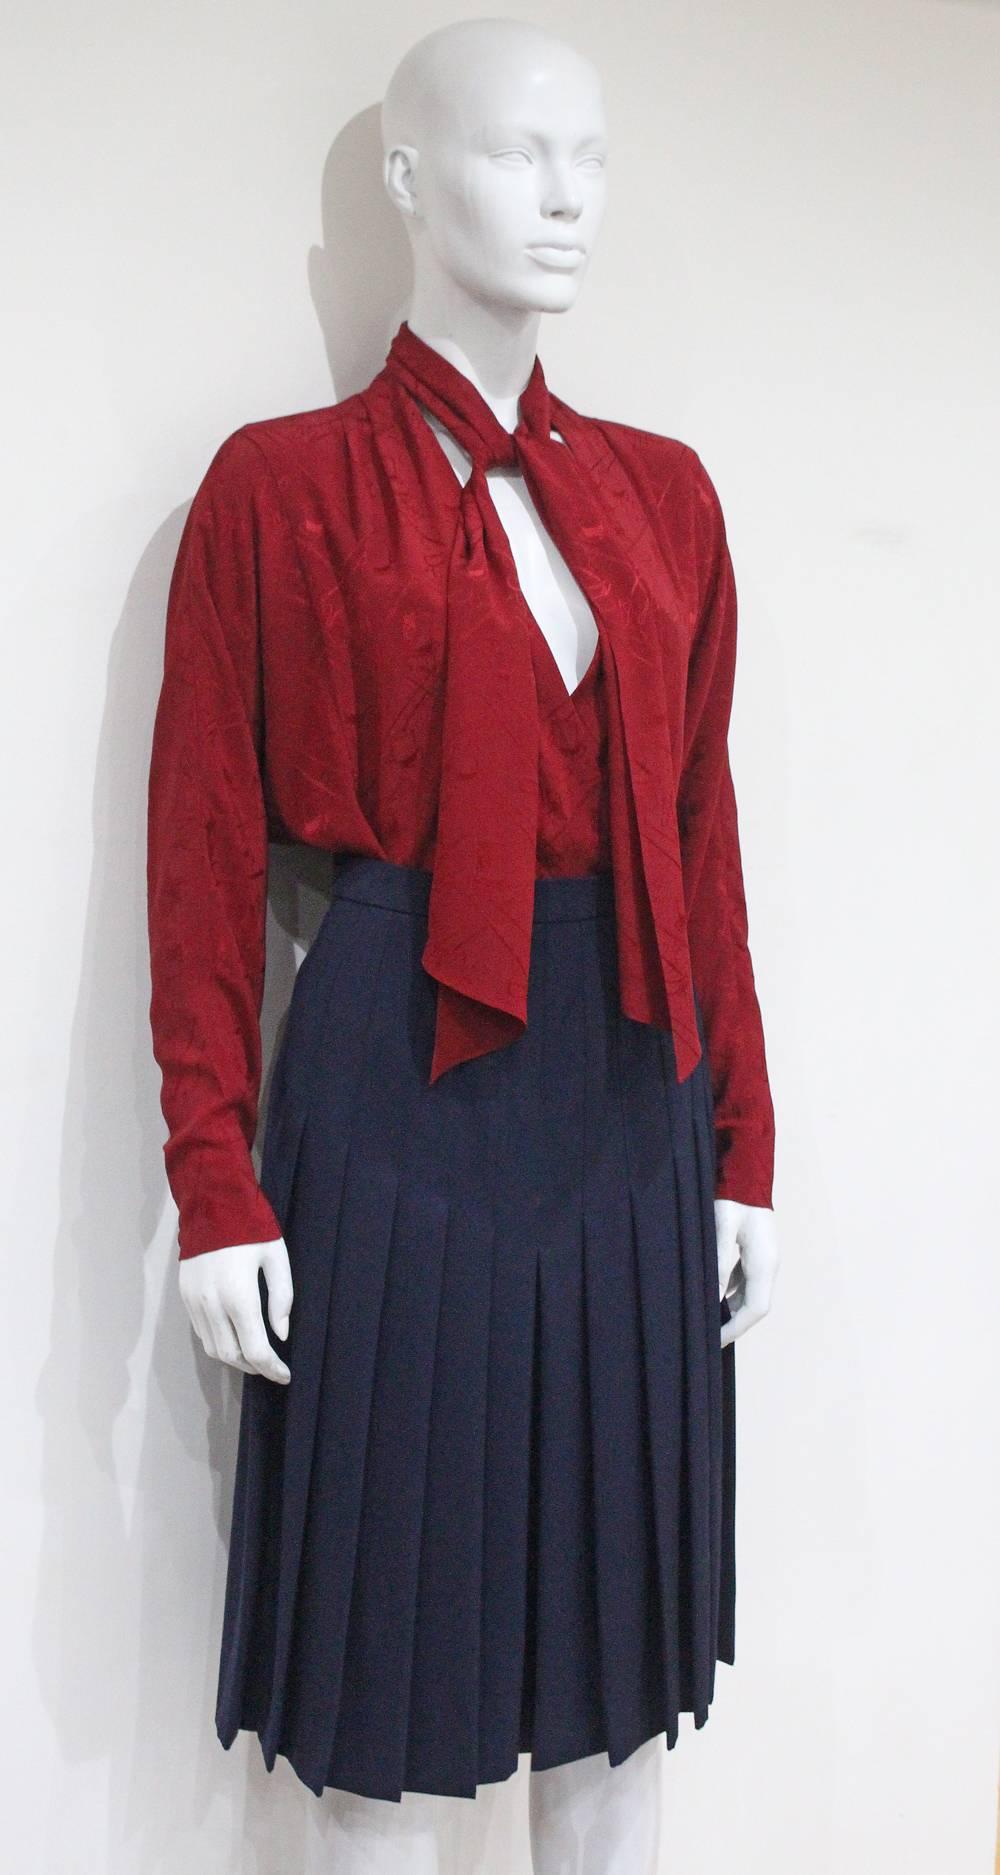 Hermes pleated skirt and silk blouse ensemble, c. 1970s 1